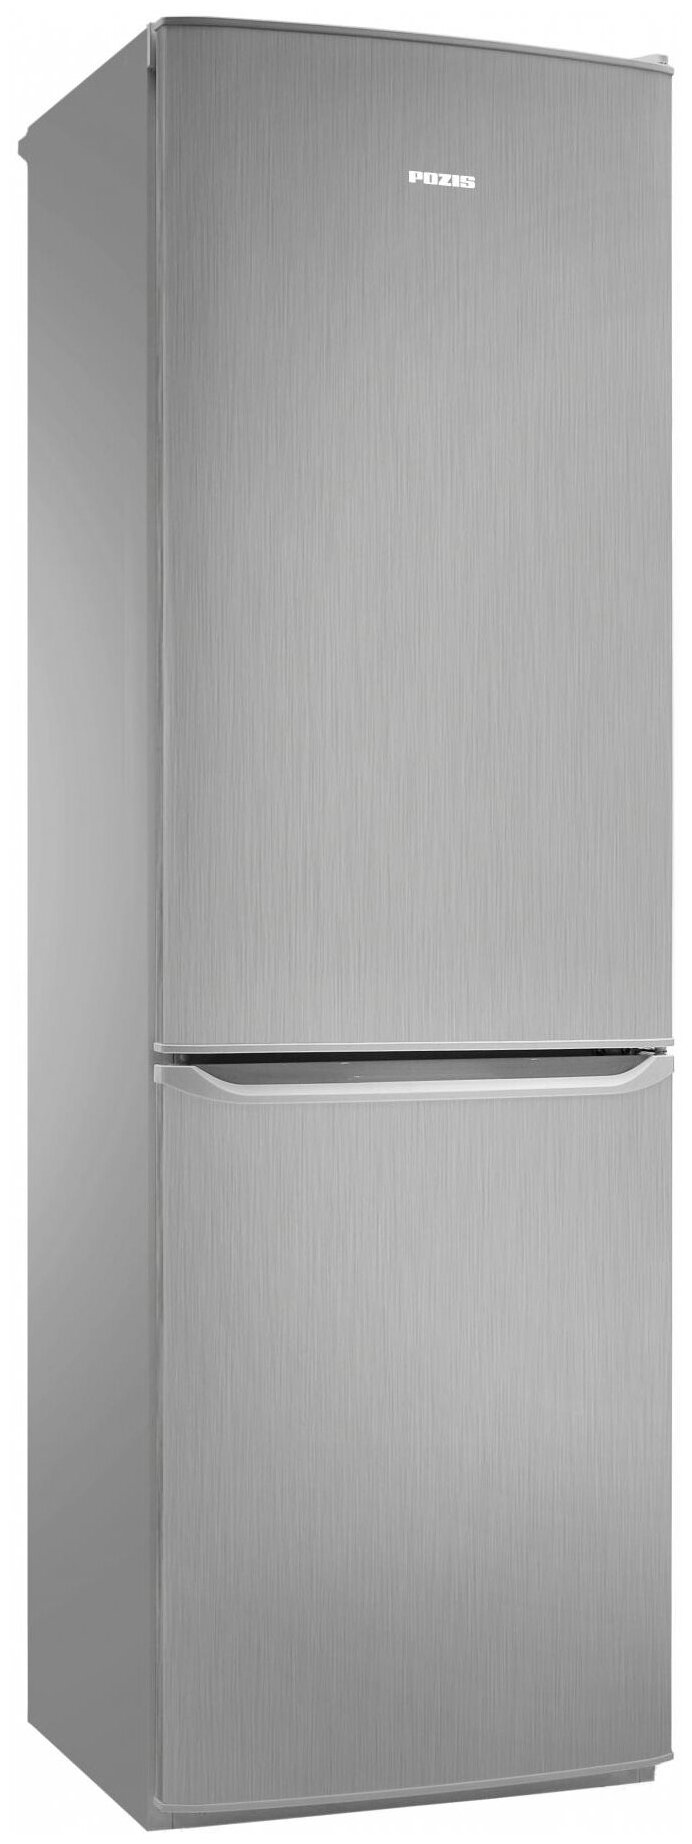 Холодильник Pozis RK-149 В, серебристый металлопласт